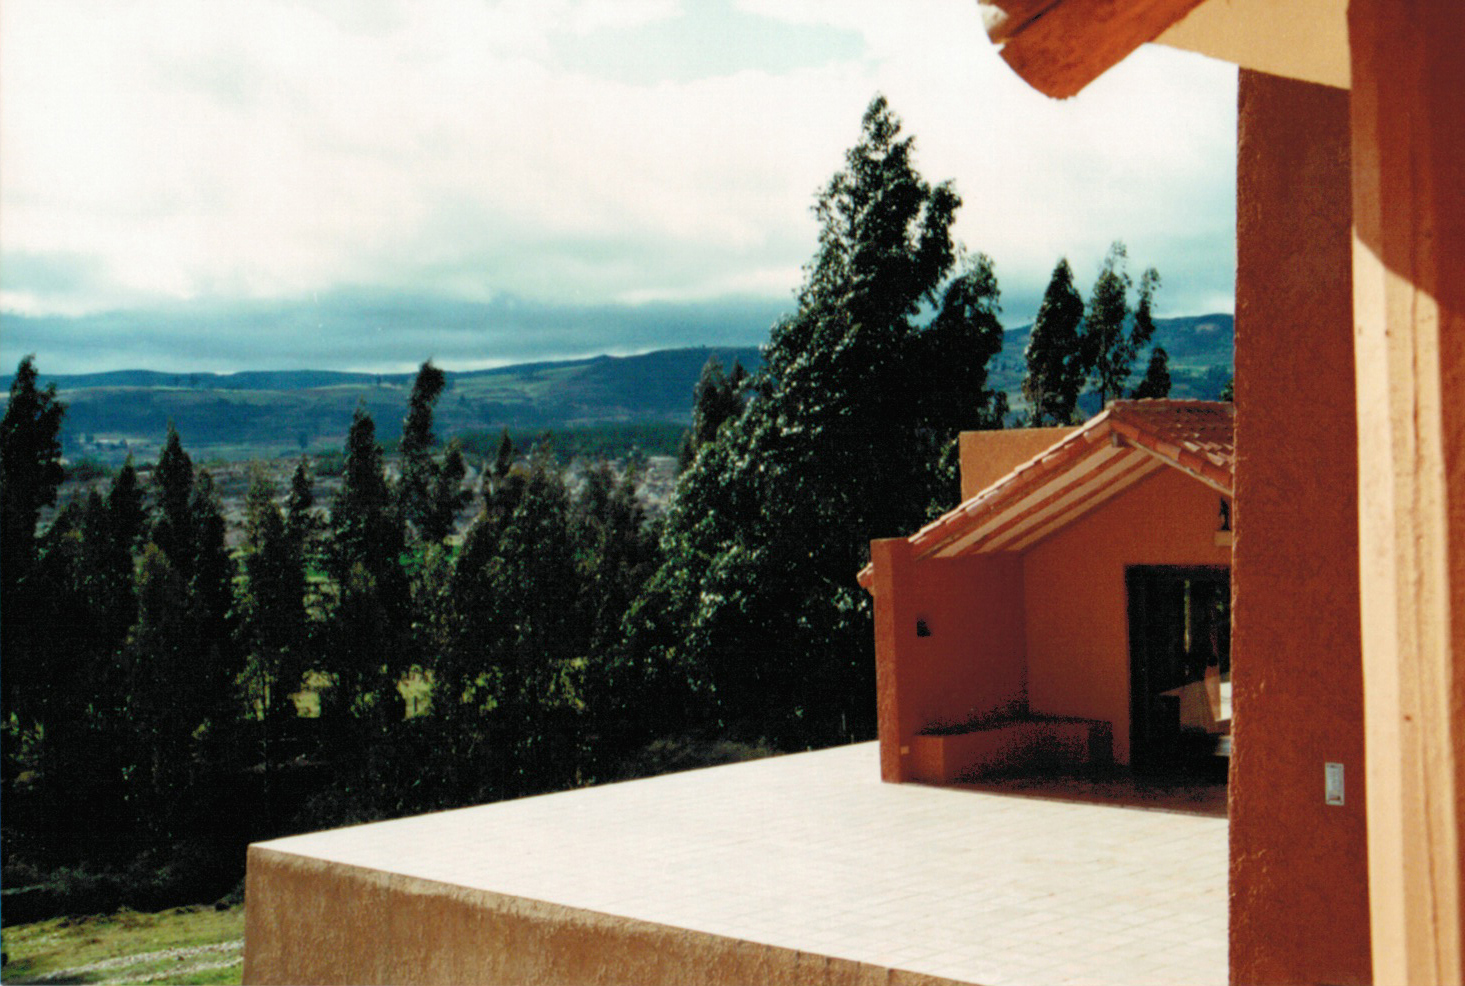 Hacienda Santana Cristina Rodriguez Studio at Boyacá, Colombia in 1995